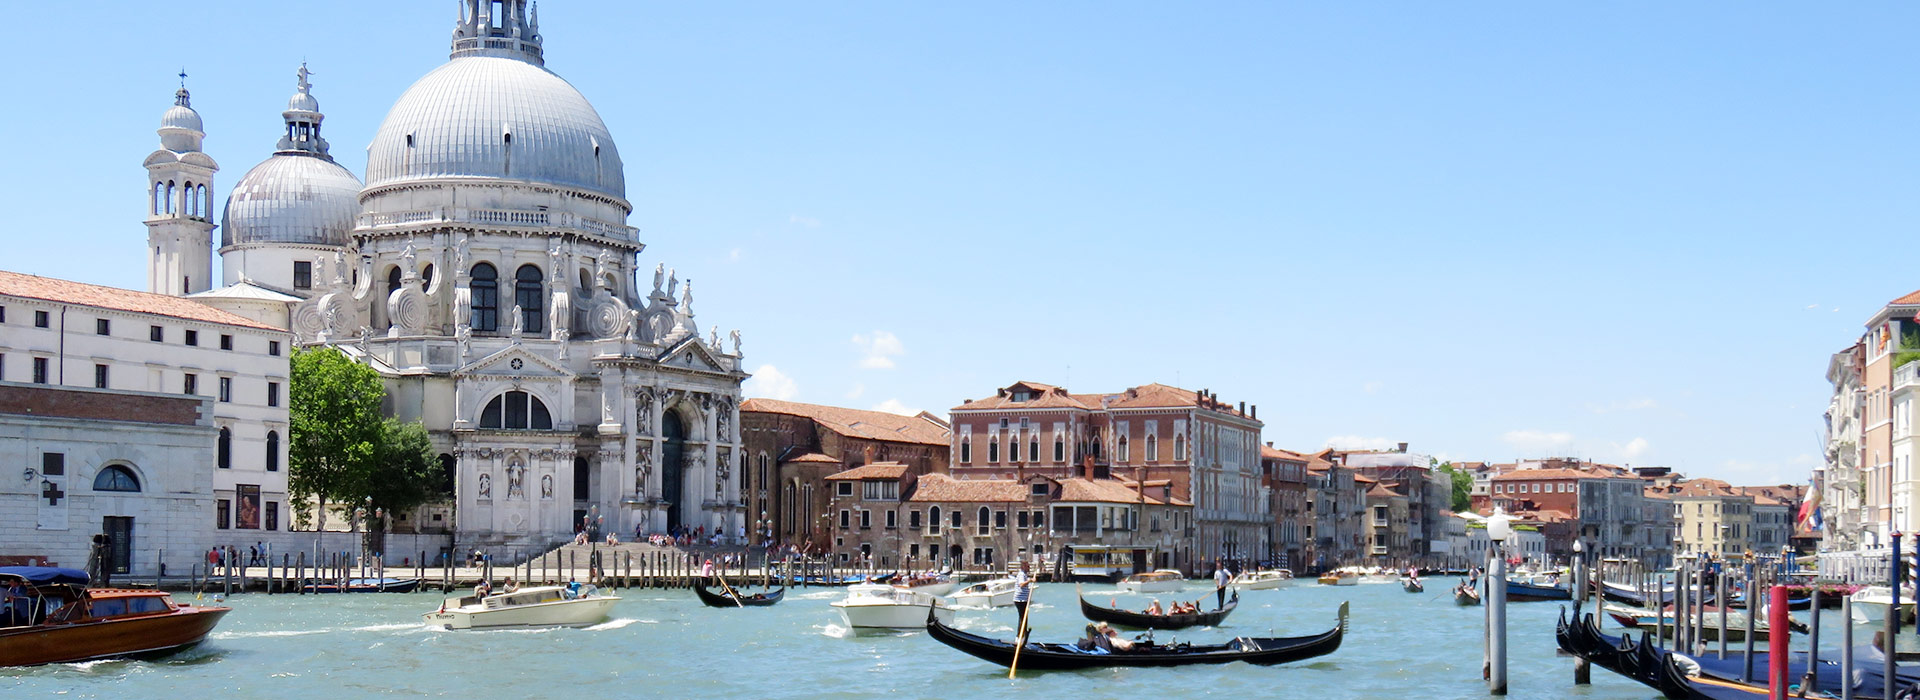 Venice Tourist Information